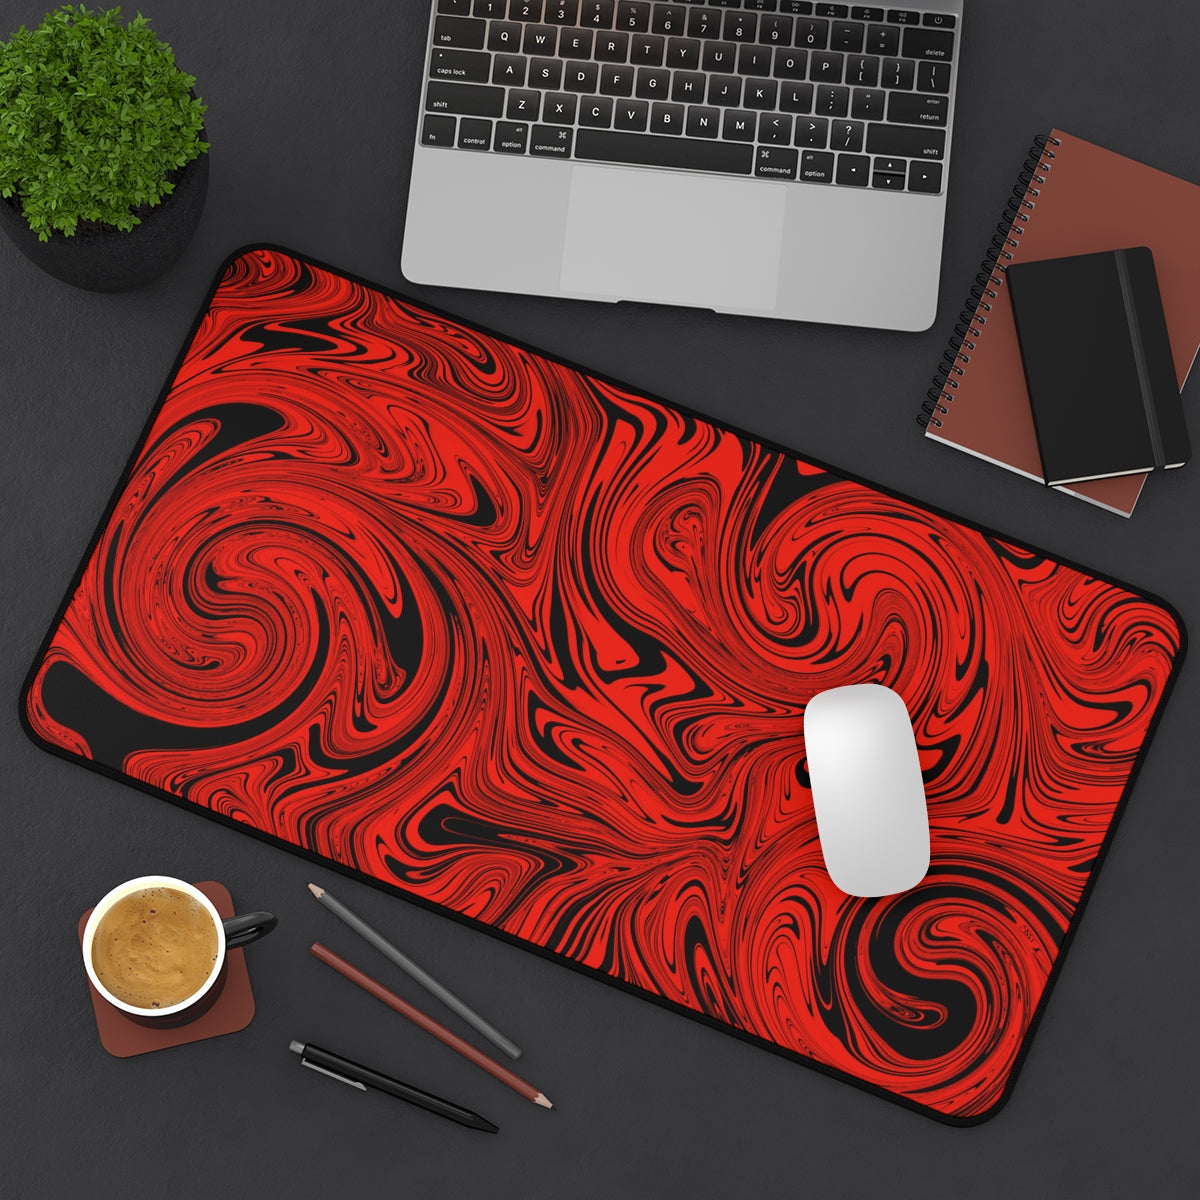 Black & Red Swirl Desk Mat - Desk Cookies